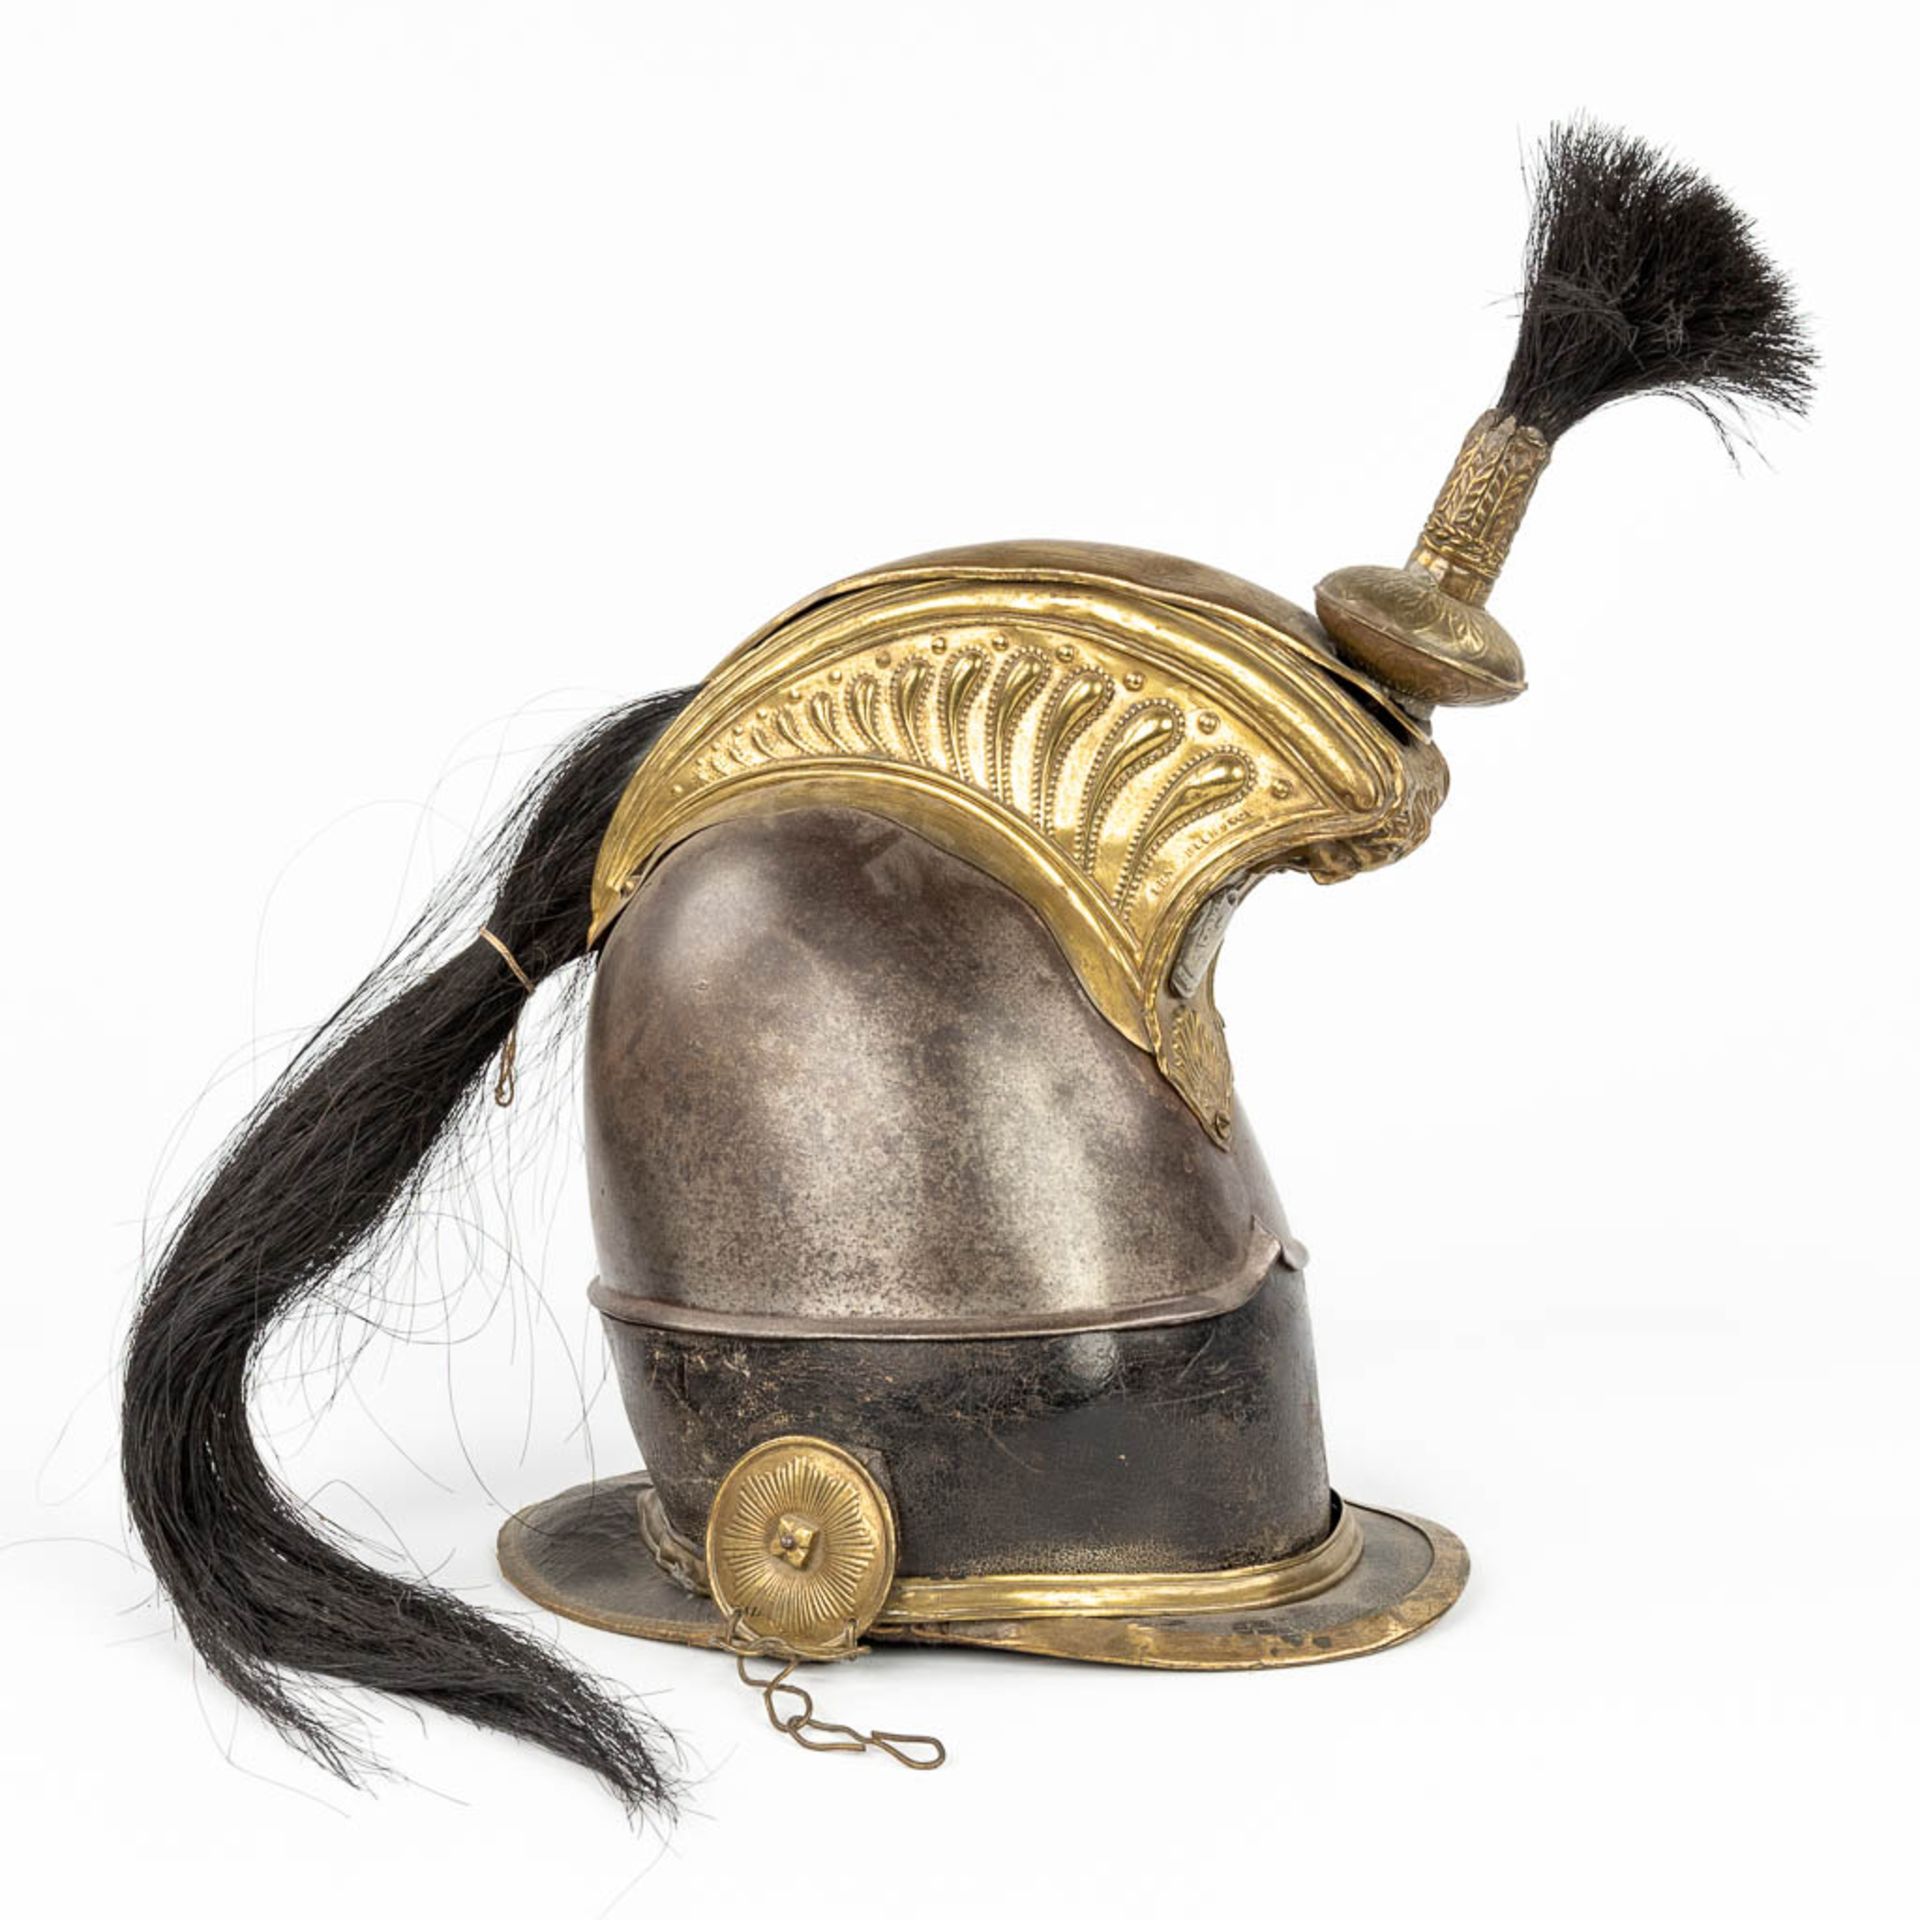 A Belgian 'Cruissasier' helmet, marked Fabrication Lige, 1831. (L:36 x W:20 x H:39 cm)